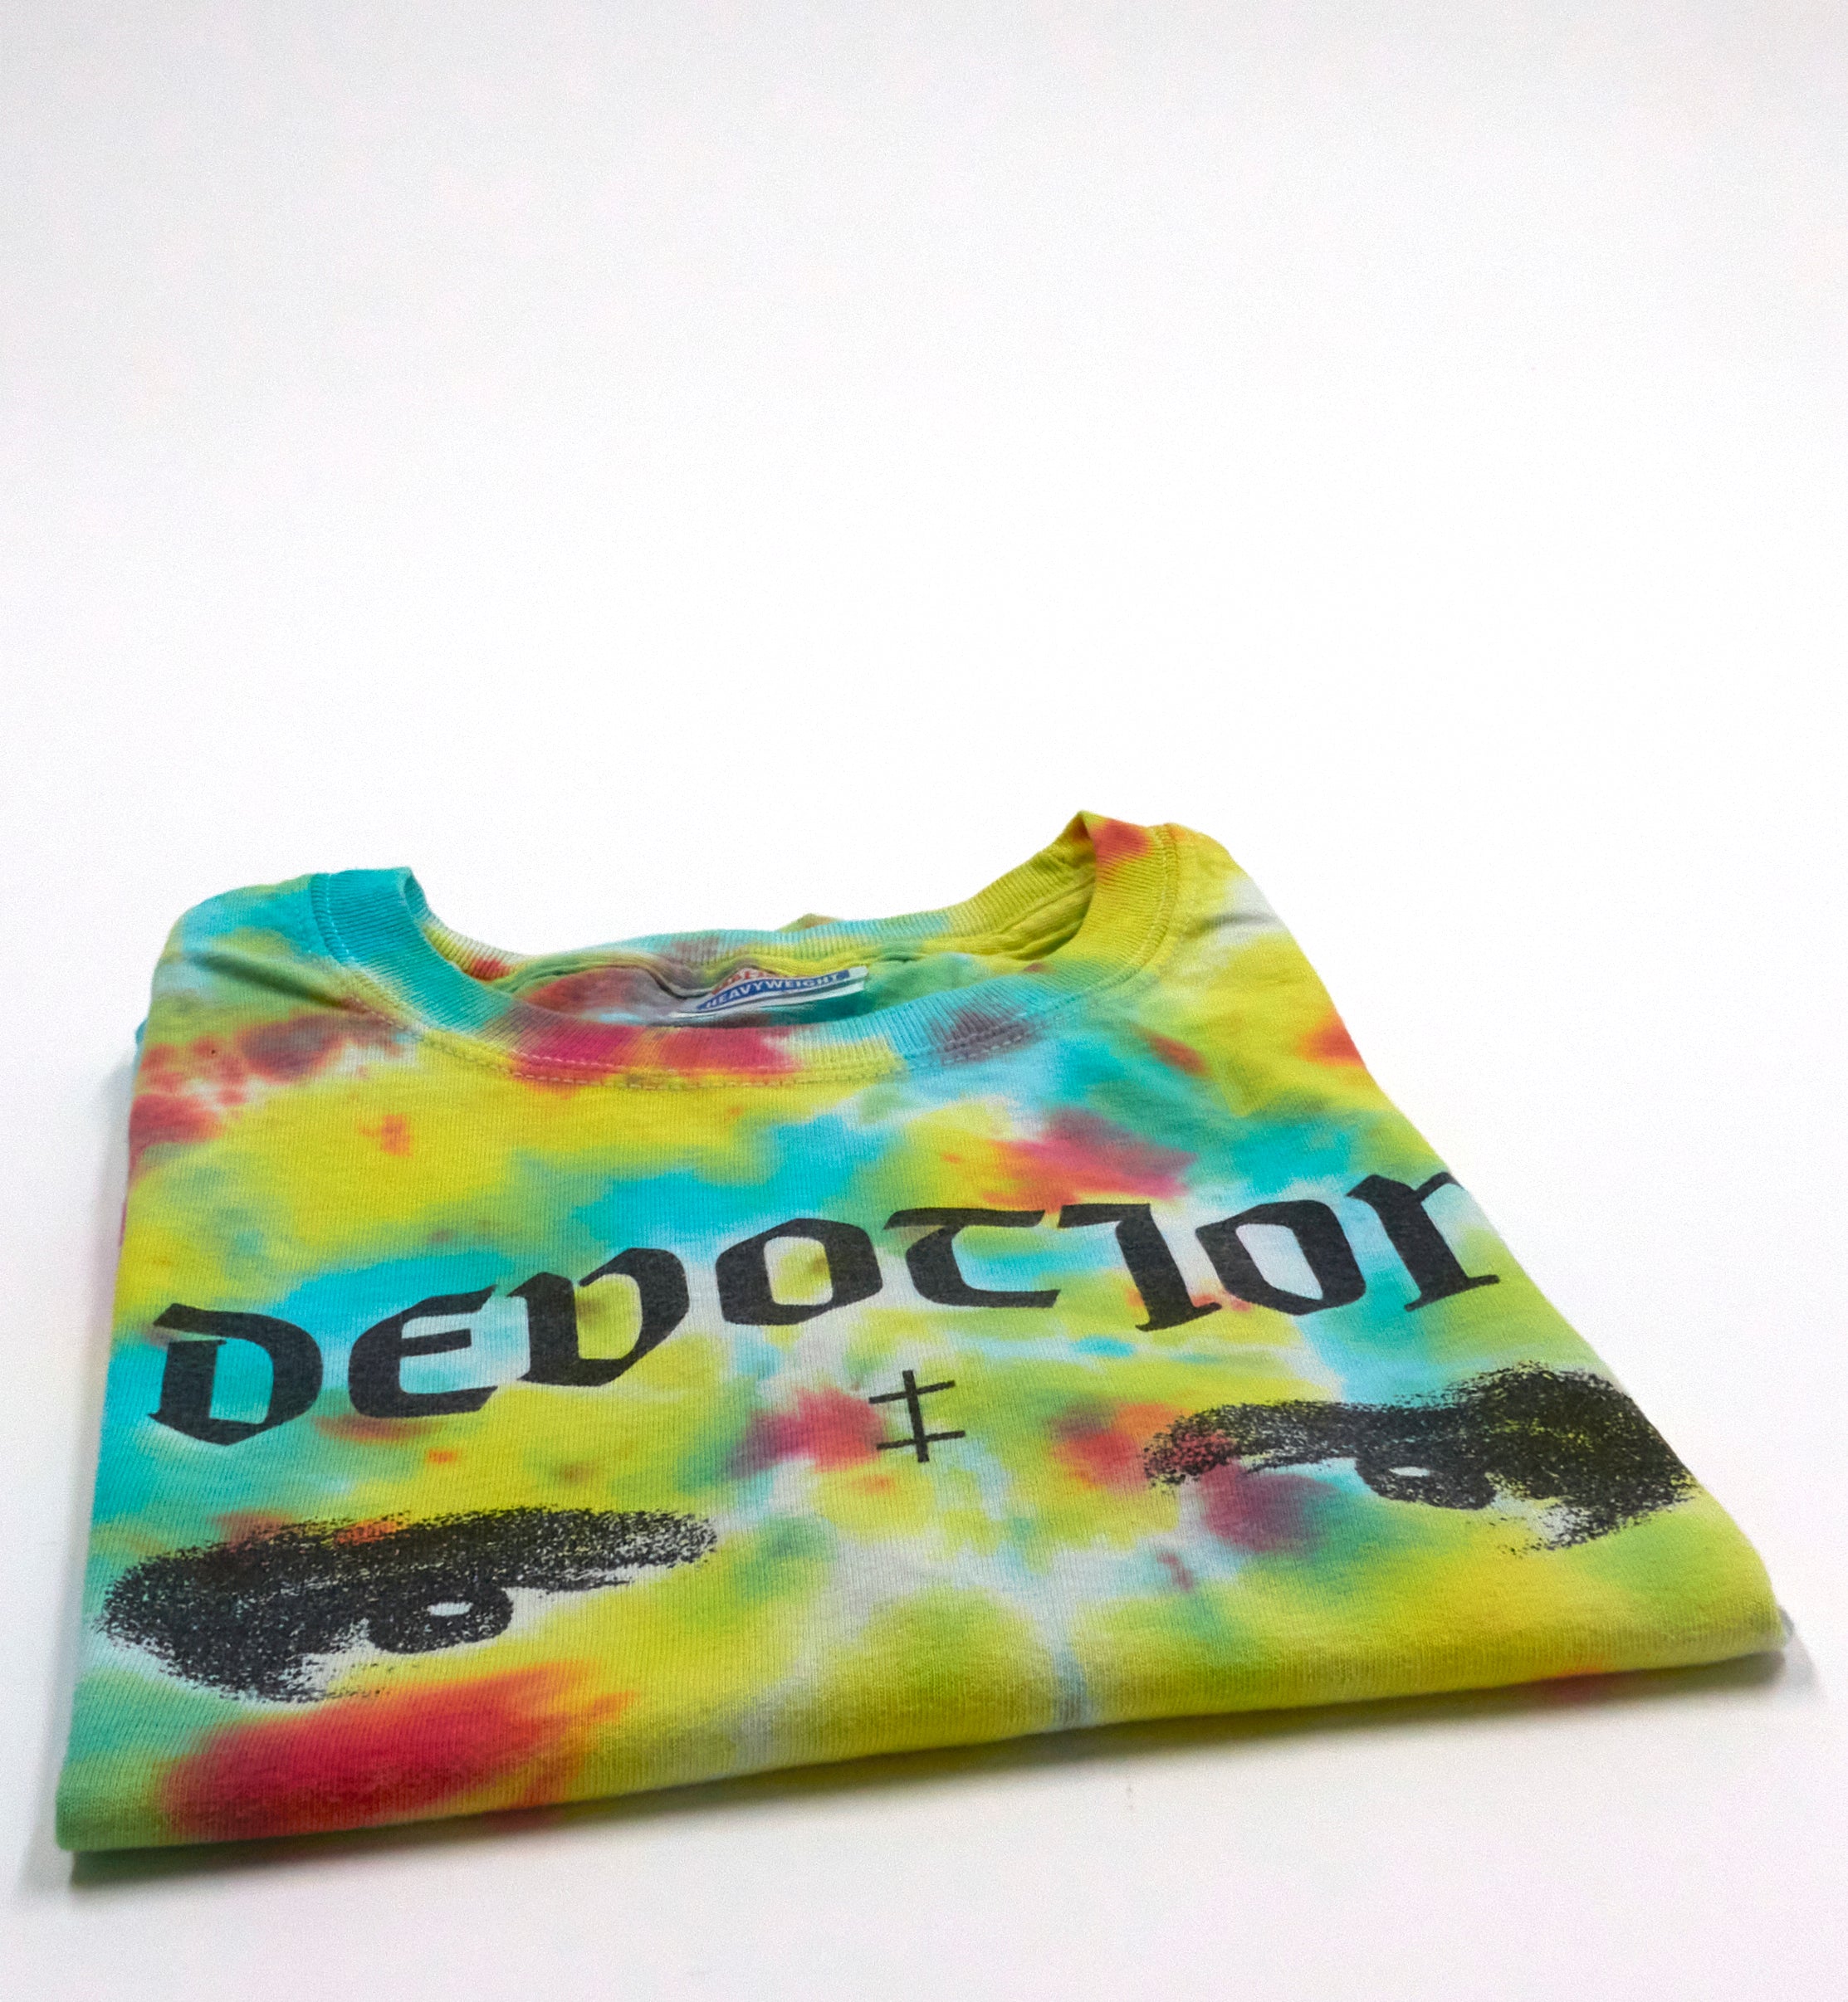 Devotion - Eyes Of Eternity 2011 Tour Shirt Size Medium